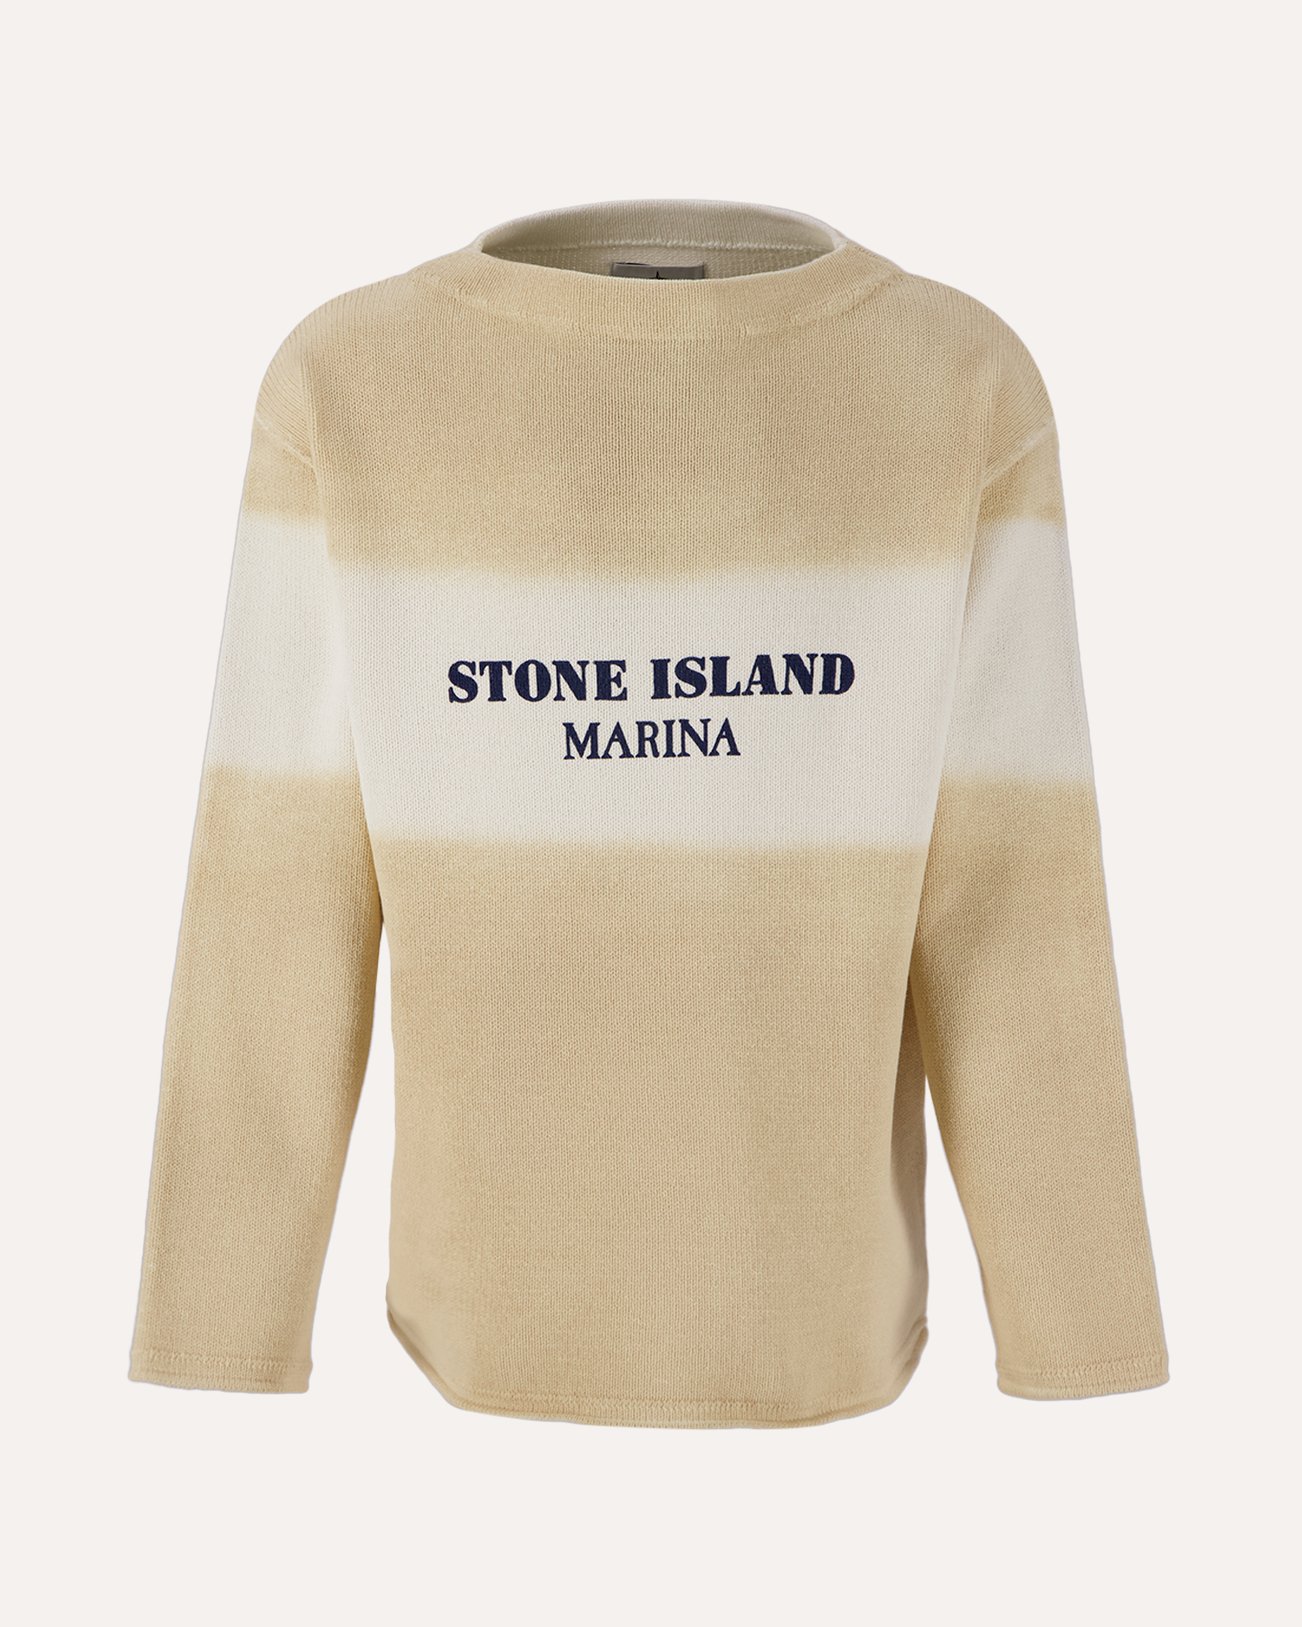 Stone Island 508XA Stone Island Marina - Raw Organic Cotton Knit BEIGE 1